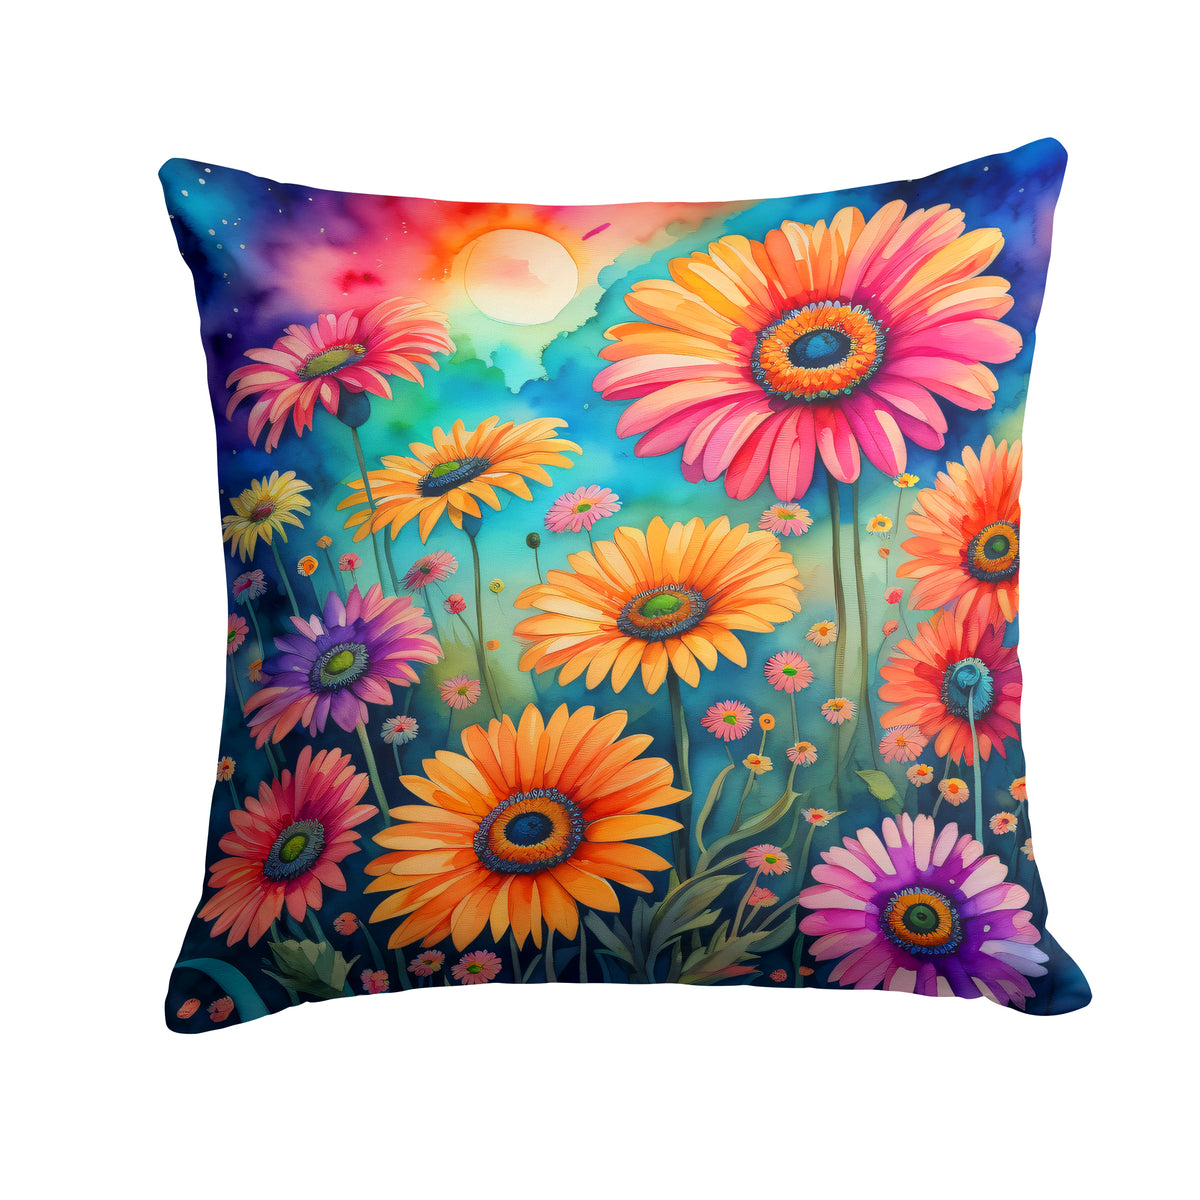 Buy this Colorful Gerbera Daisies Fabric Decorative Pillow